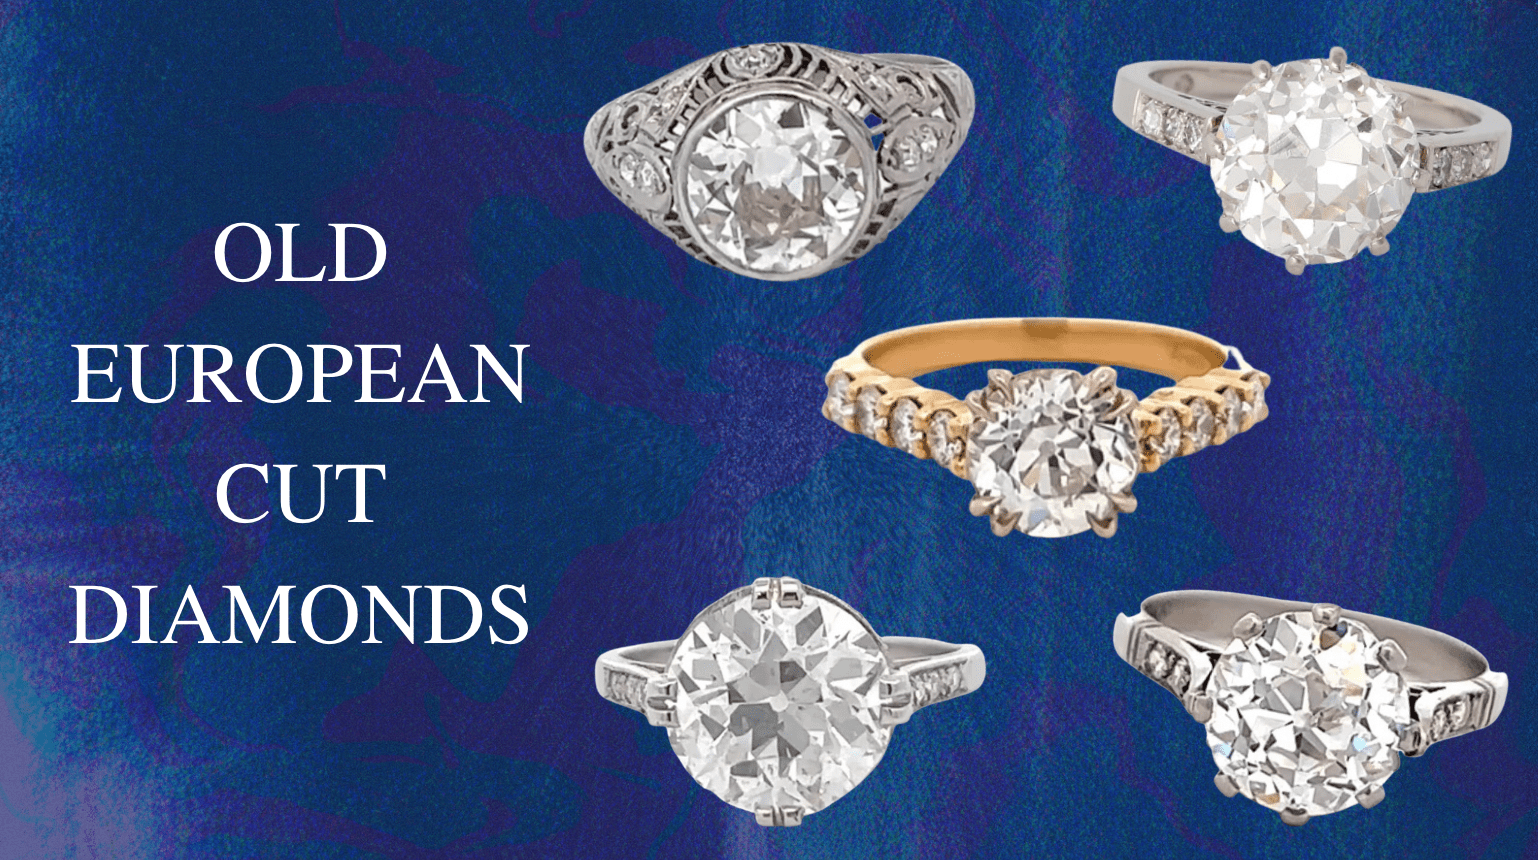 Old European Cut Diamond Facts - Jack Weir & Sons